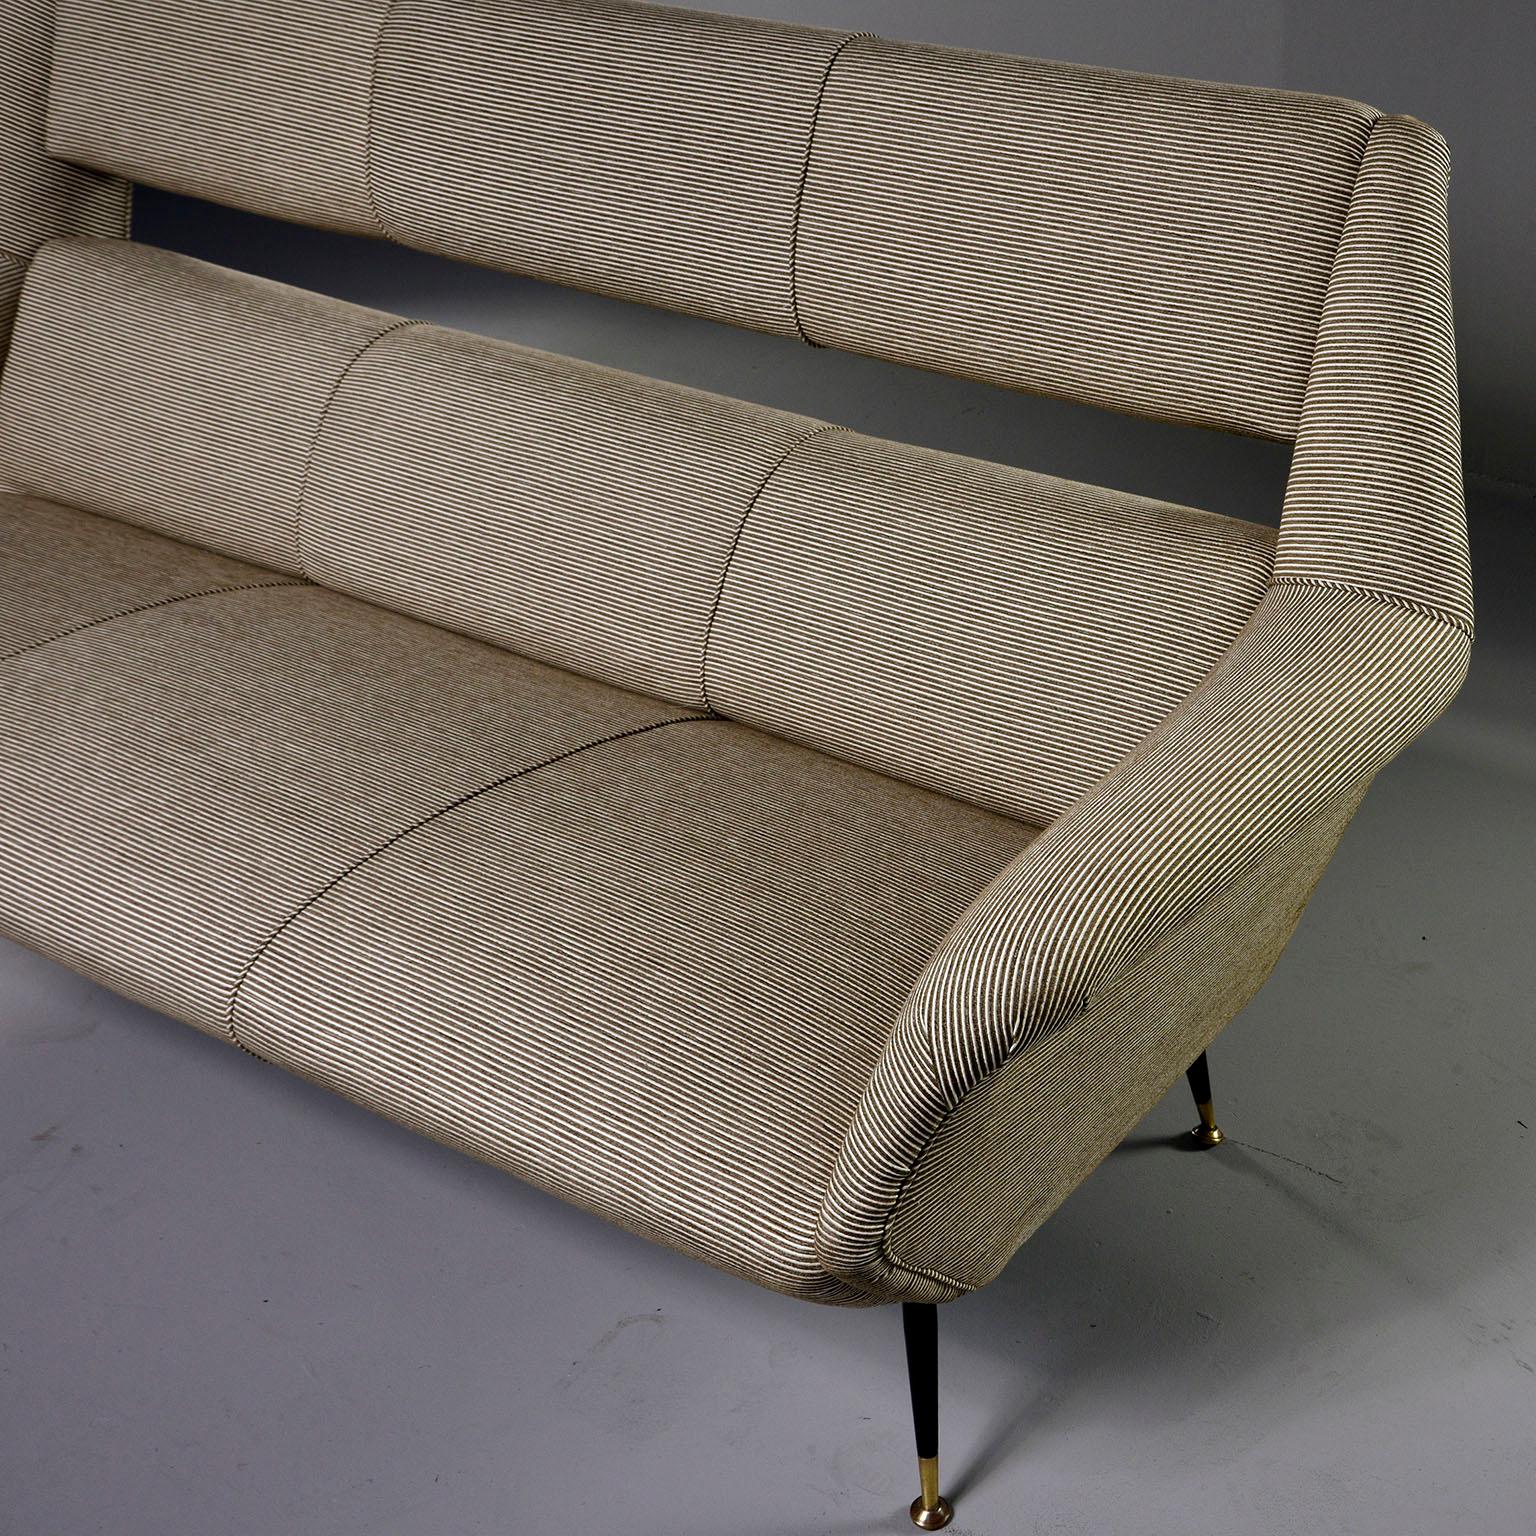 20th Century Newly Upholstered Midcentury Settee or Sofa by Gigi Radice for Minotti